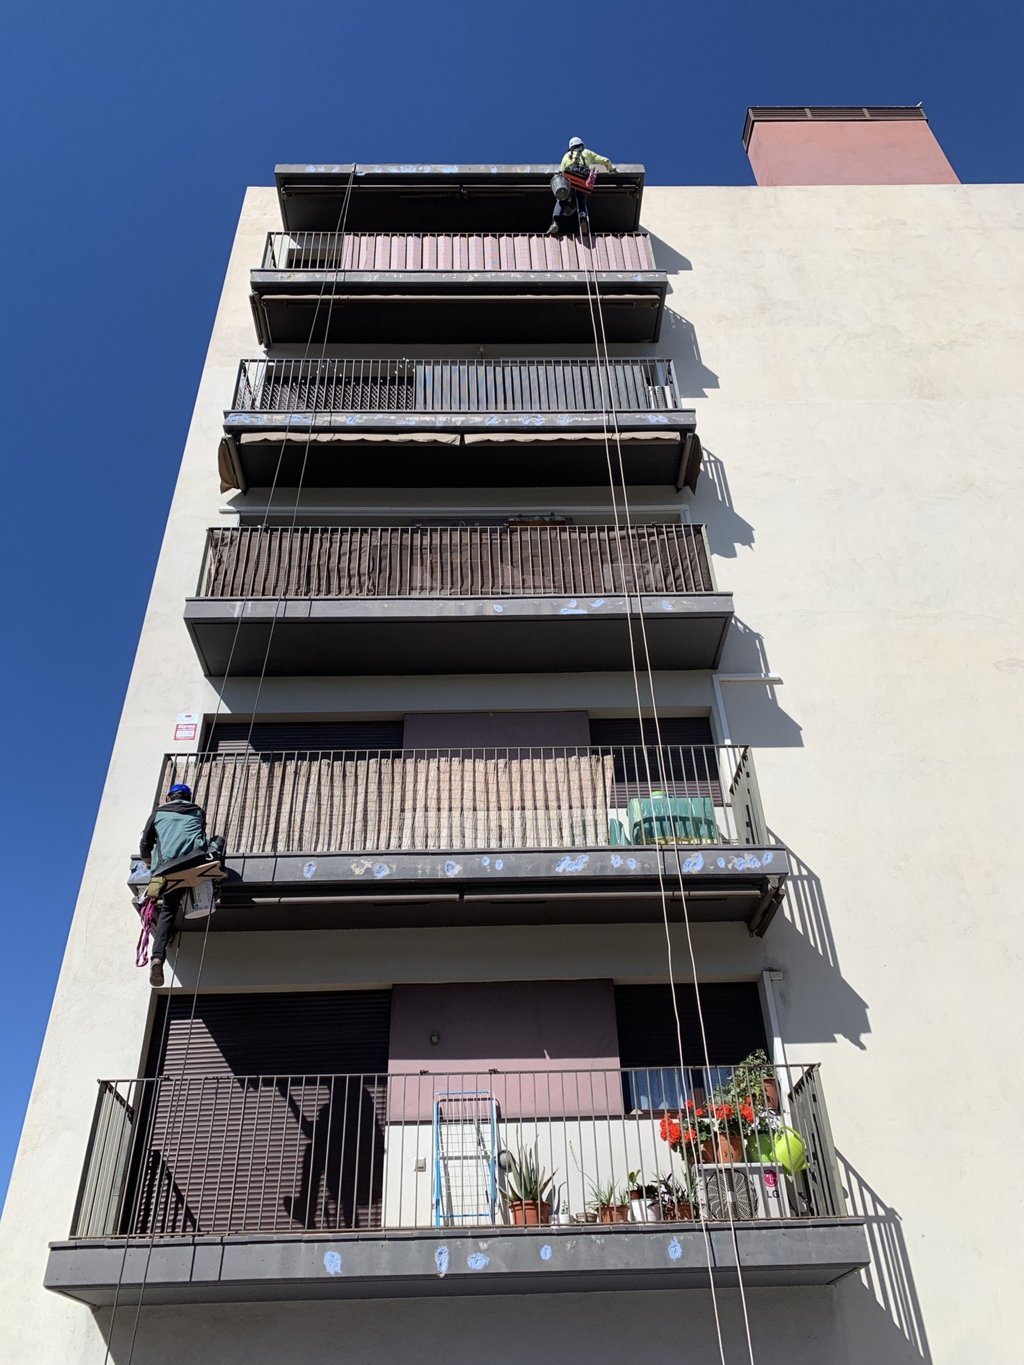 Hermes Vertical vista de edificio con cuerdas con obreros subidos